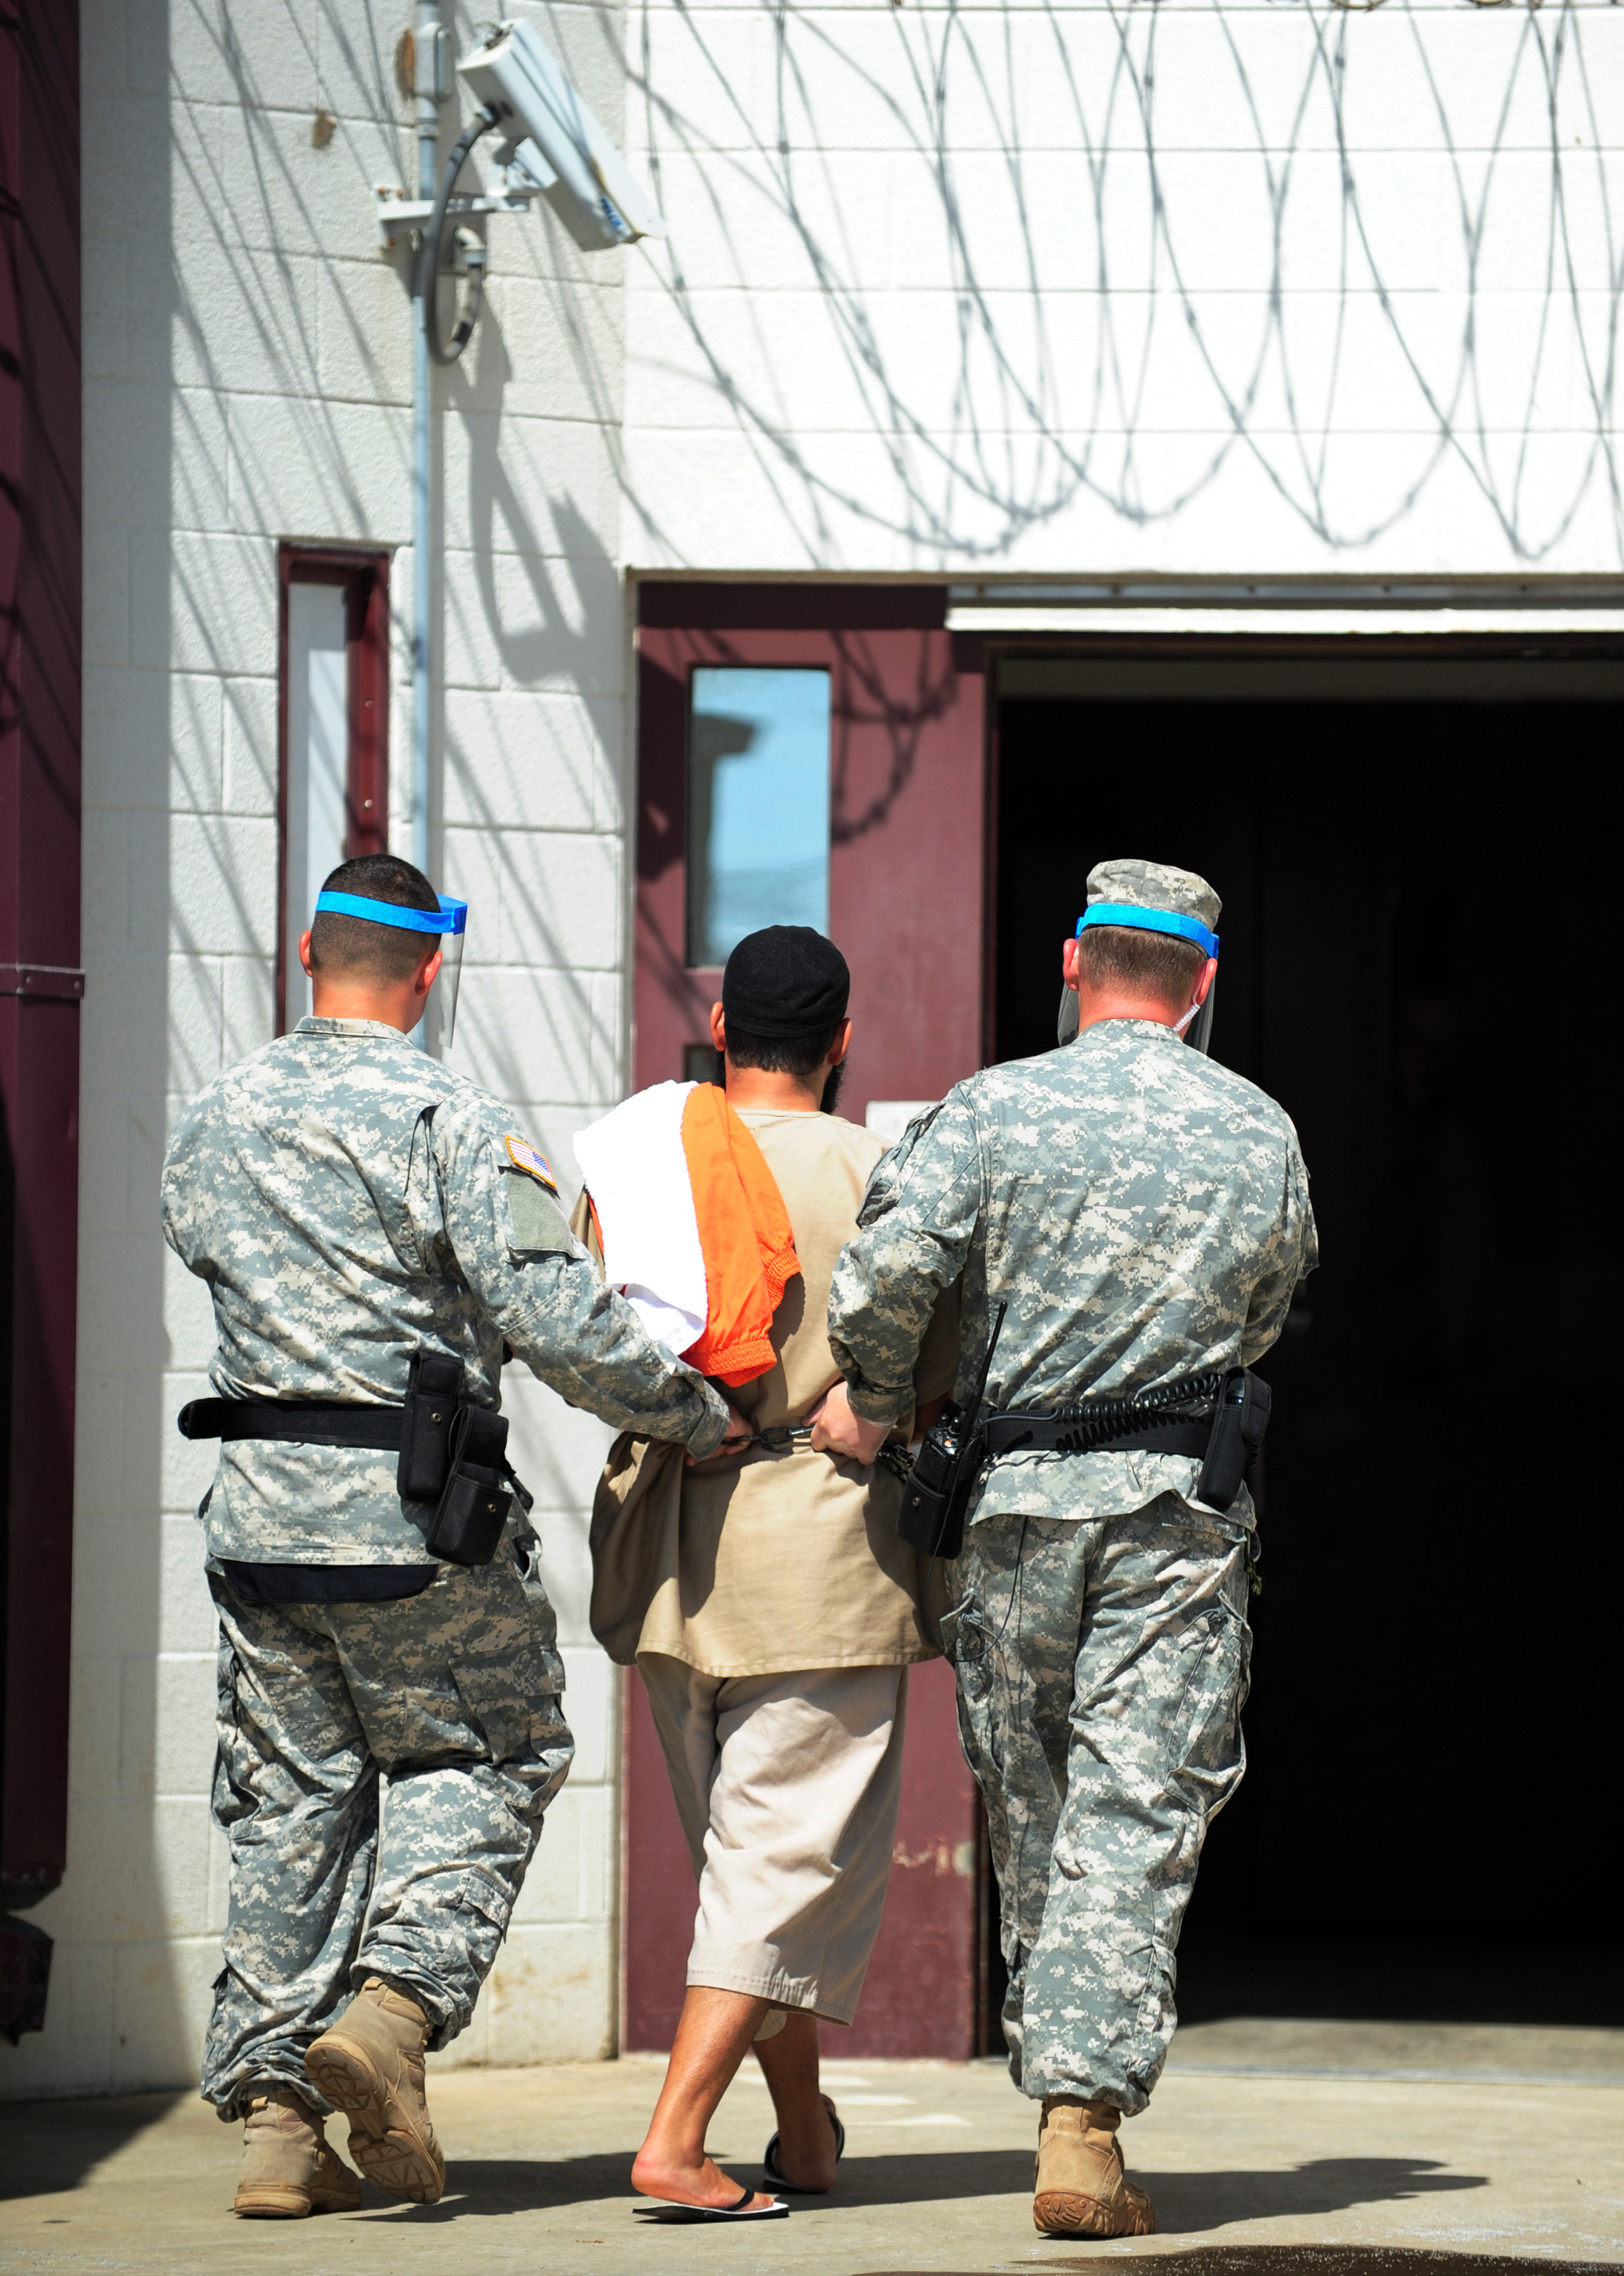 This Week in Guantánamo: 2013 and 2002 Thumbnail Image